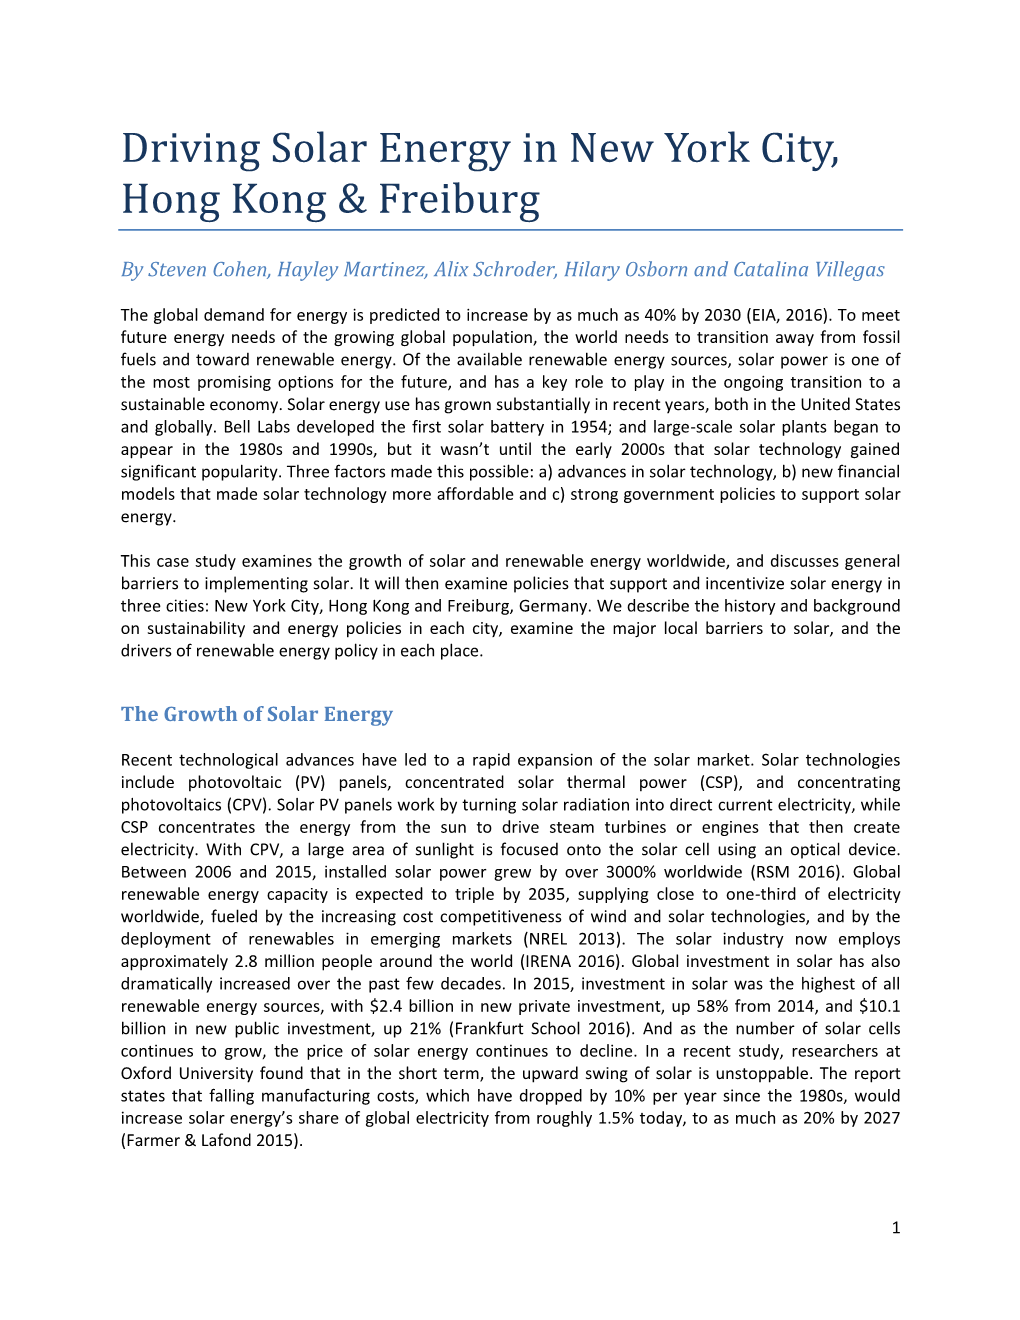 Driving Solar Energy in New York City, Hong Kong & Freiburg